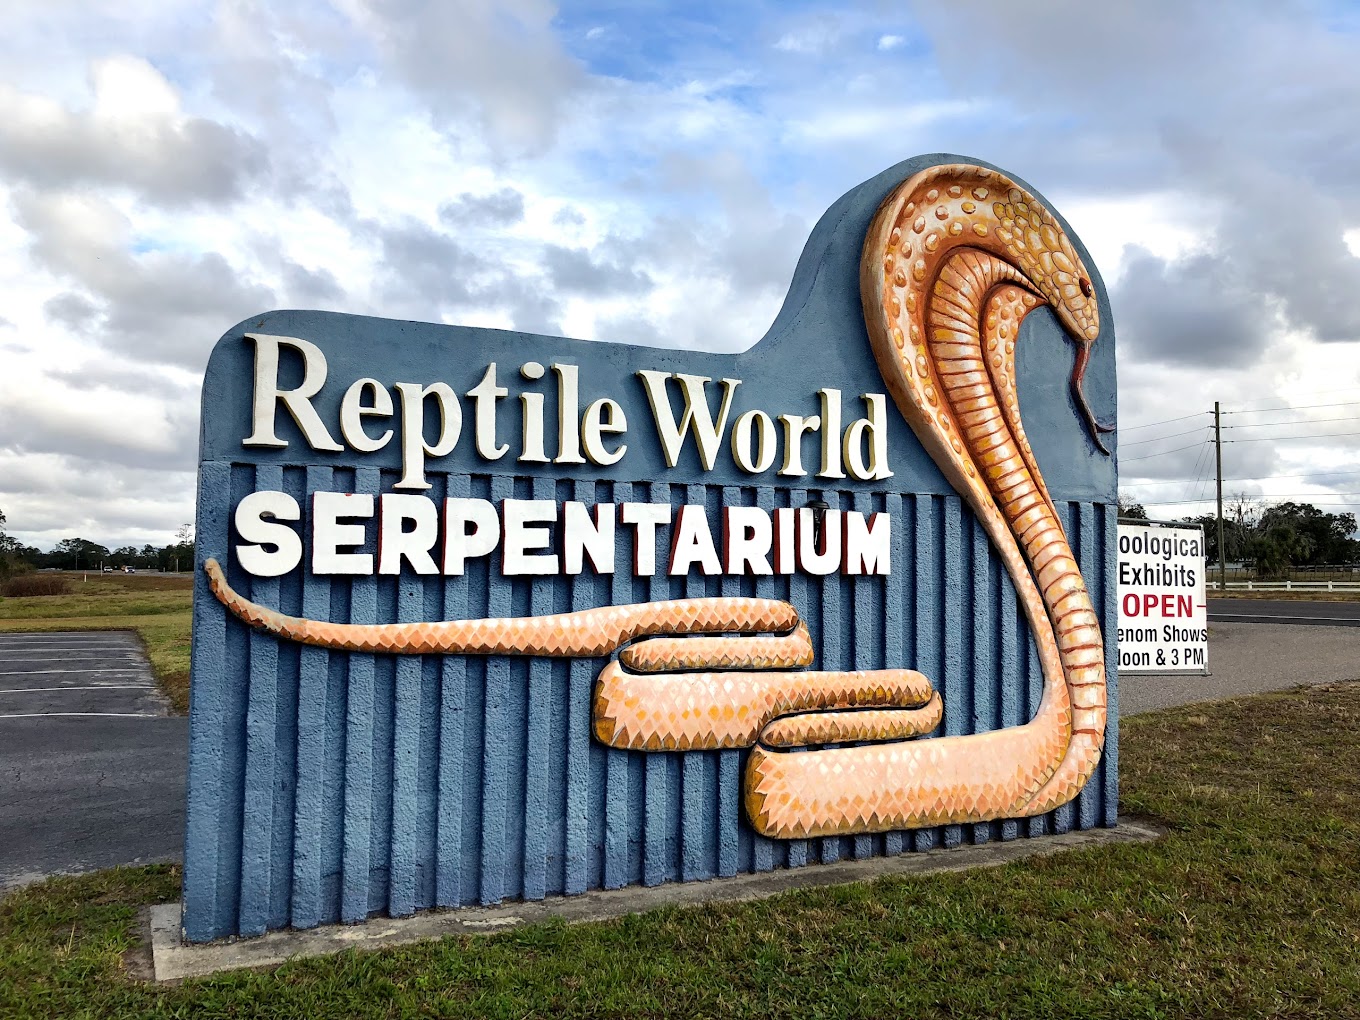 Reptile World Serpentarium, St. Cloud|Zoo and Wildlife Sanctuary |Travel